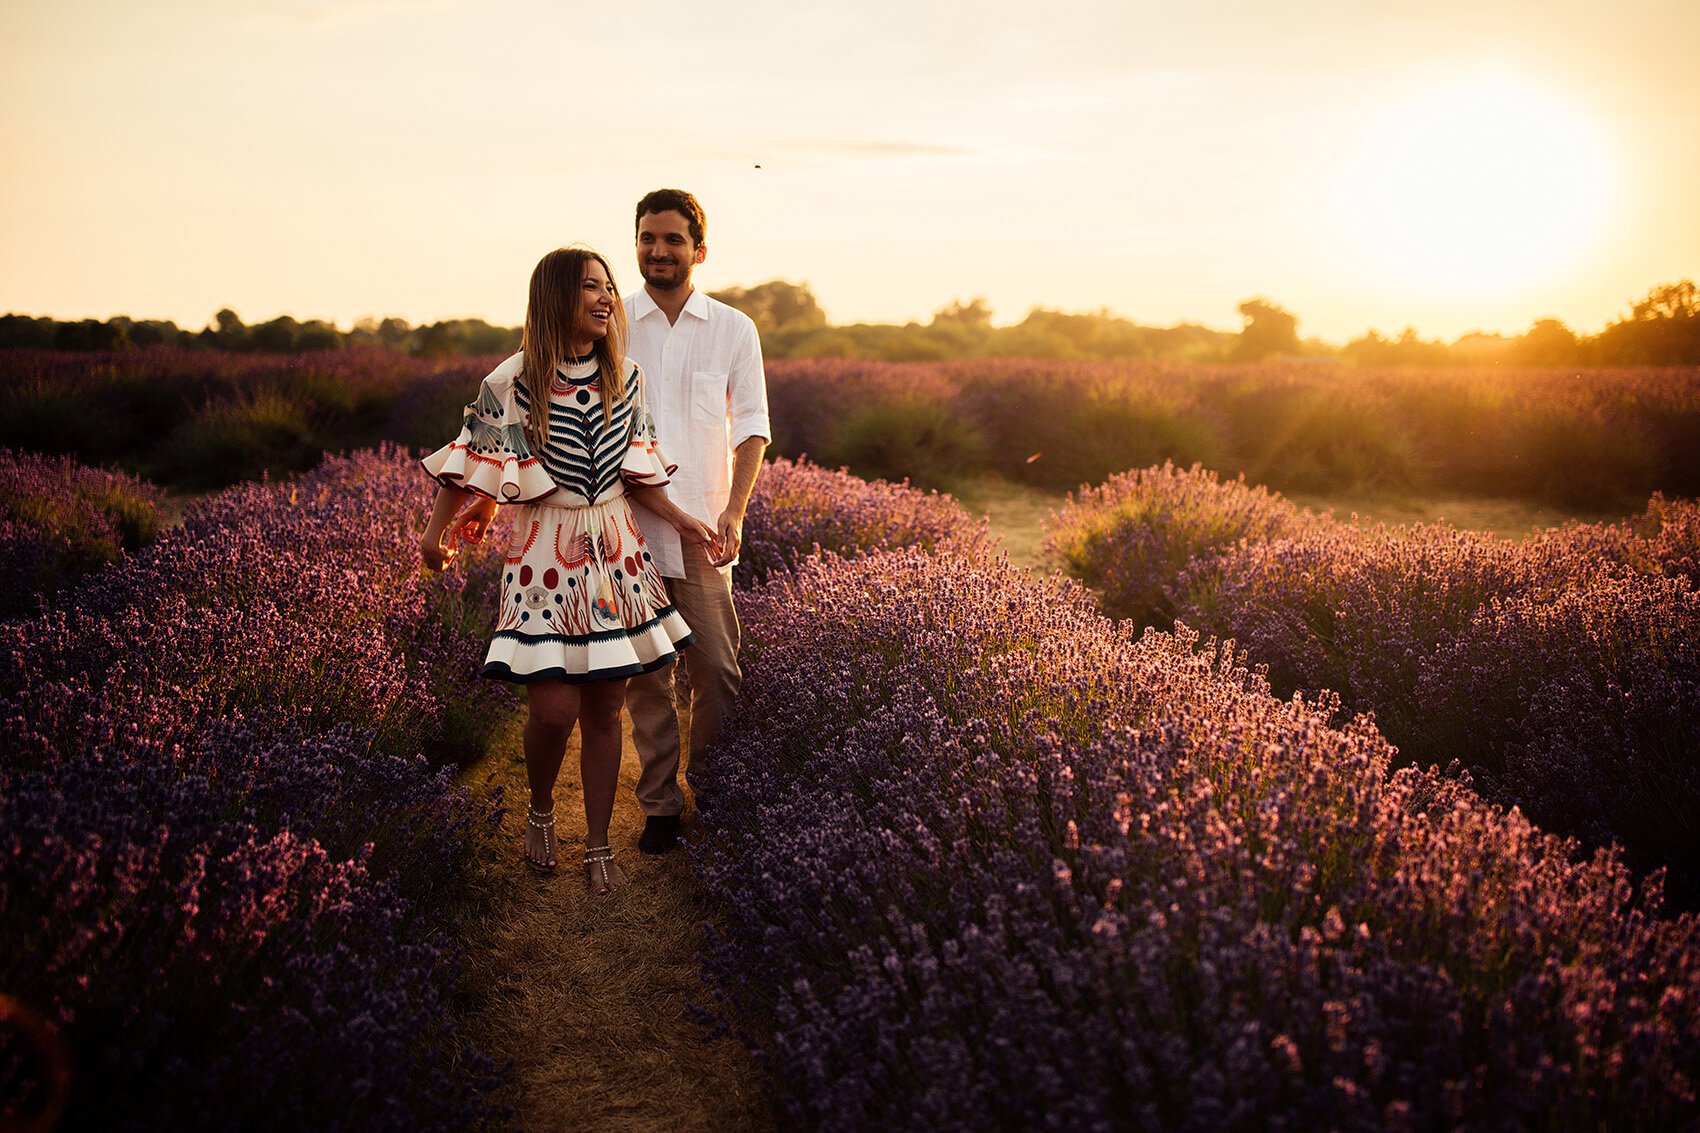 mayfield-lavender-farm-engagement-shoot0003.jpg